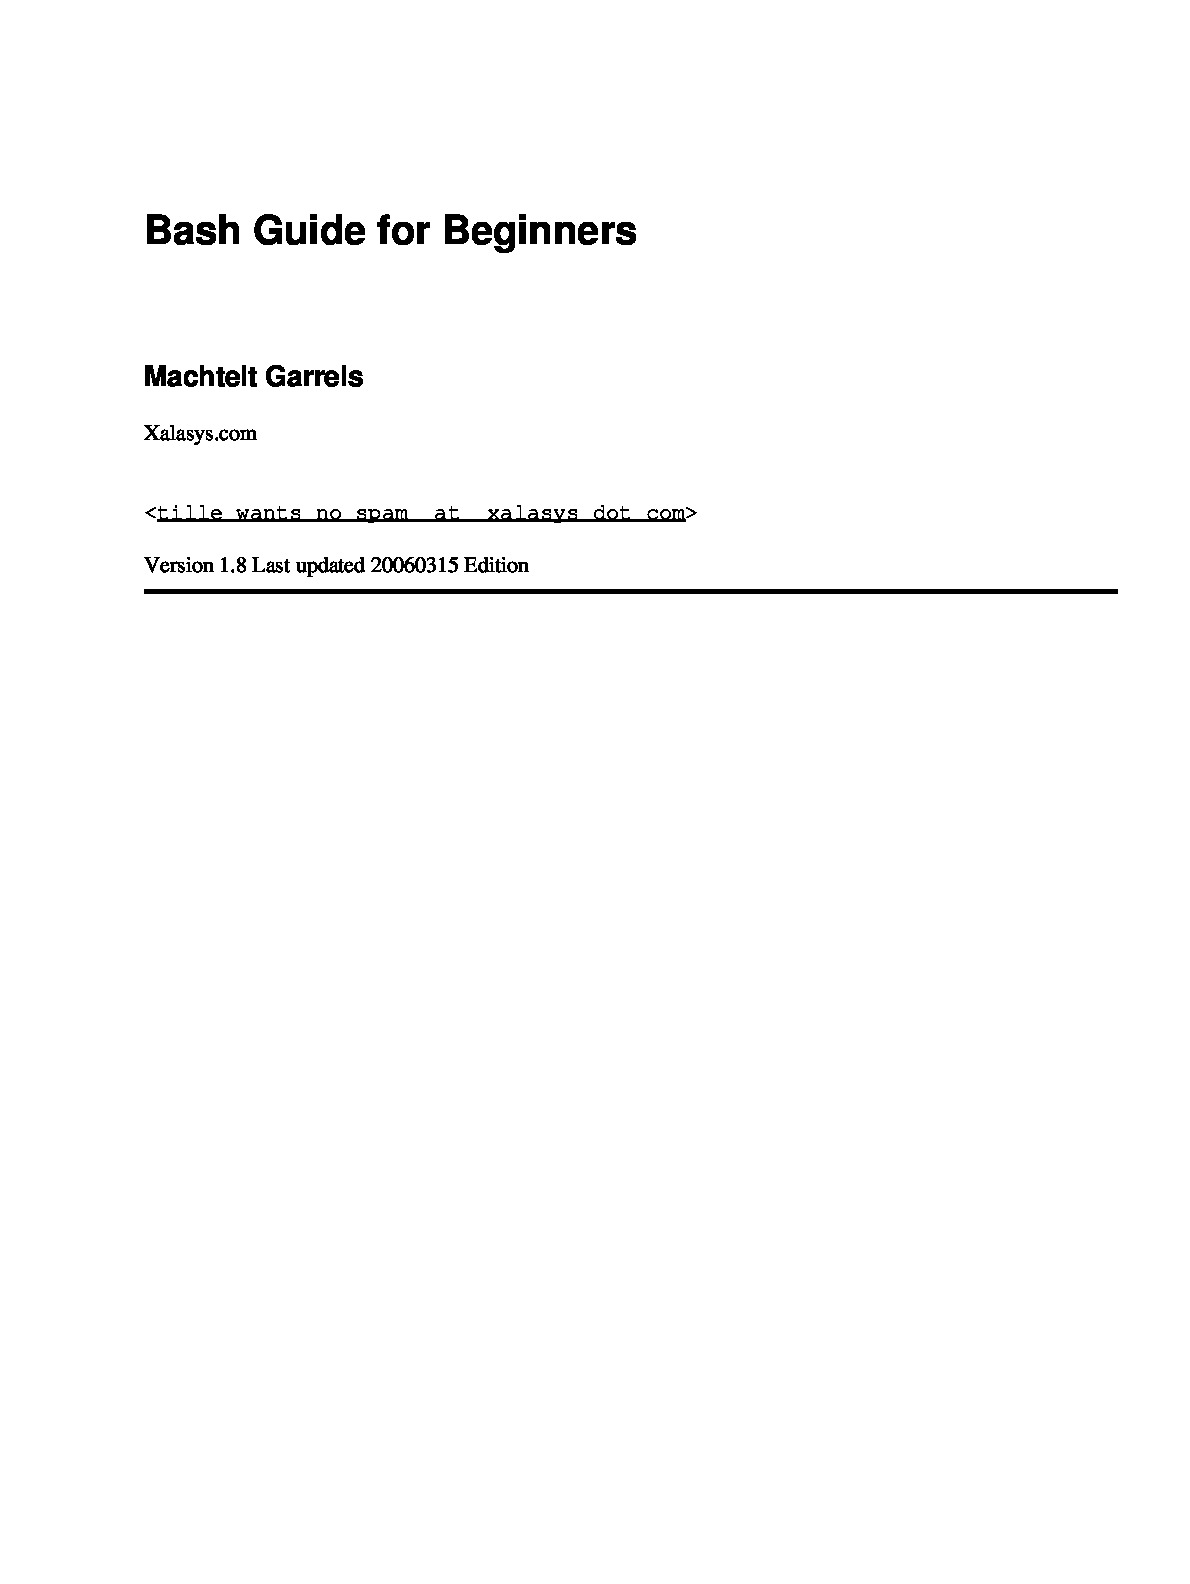 Bash-Beginners-Guide